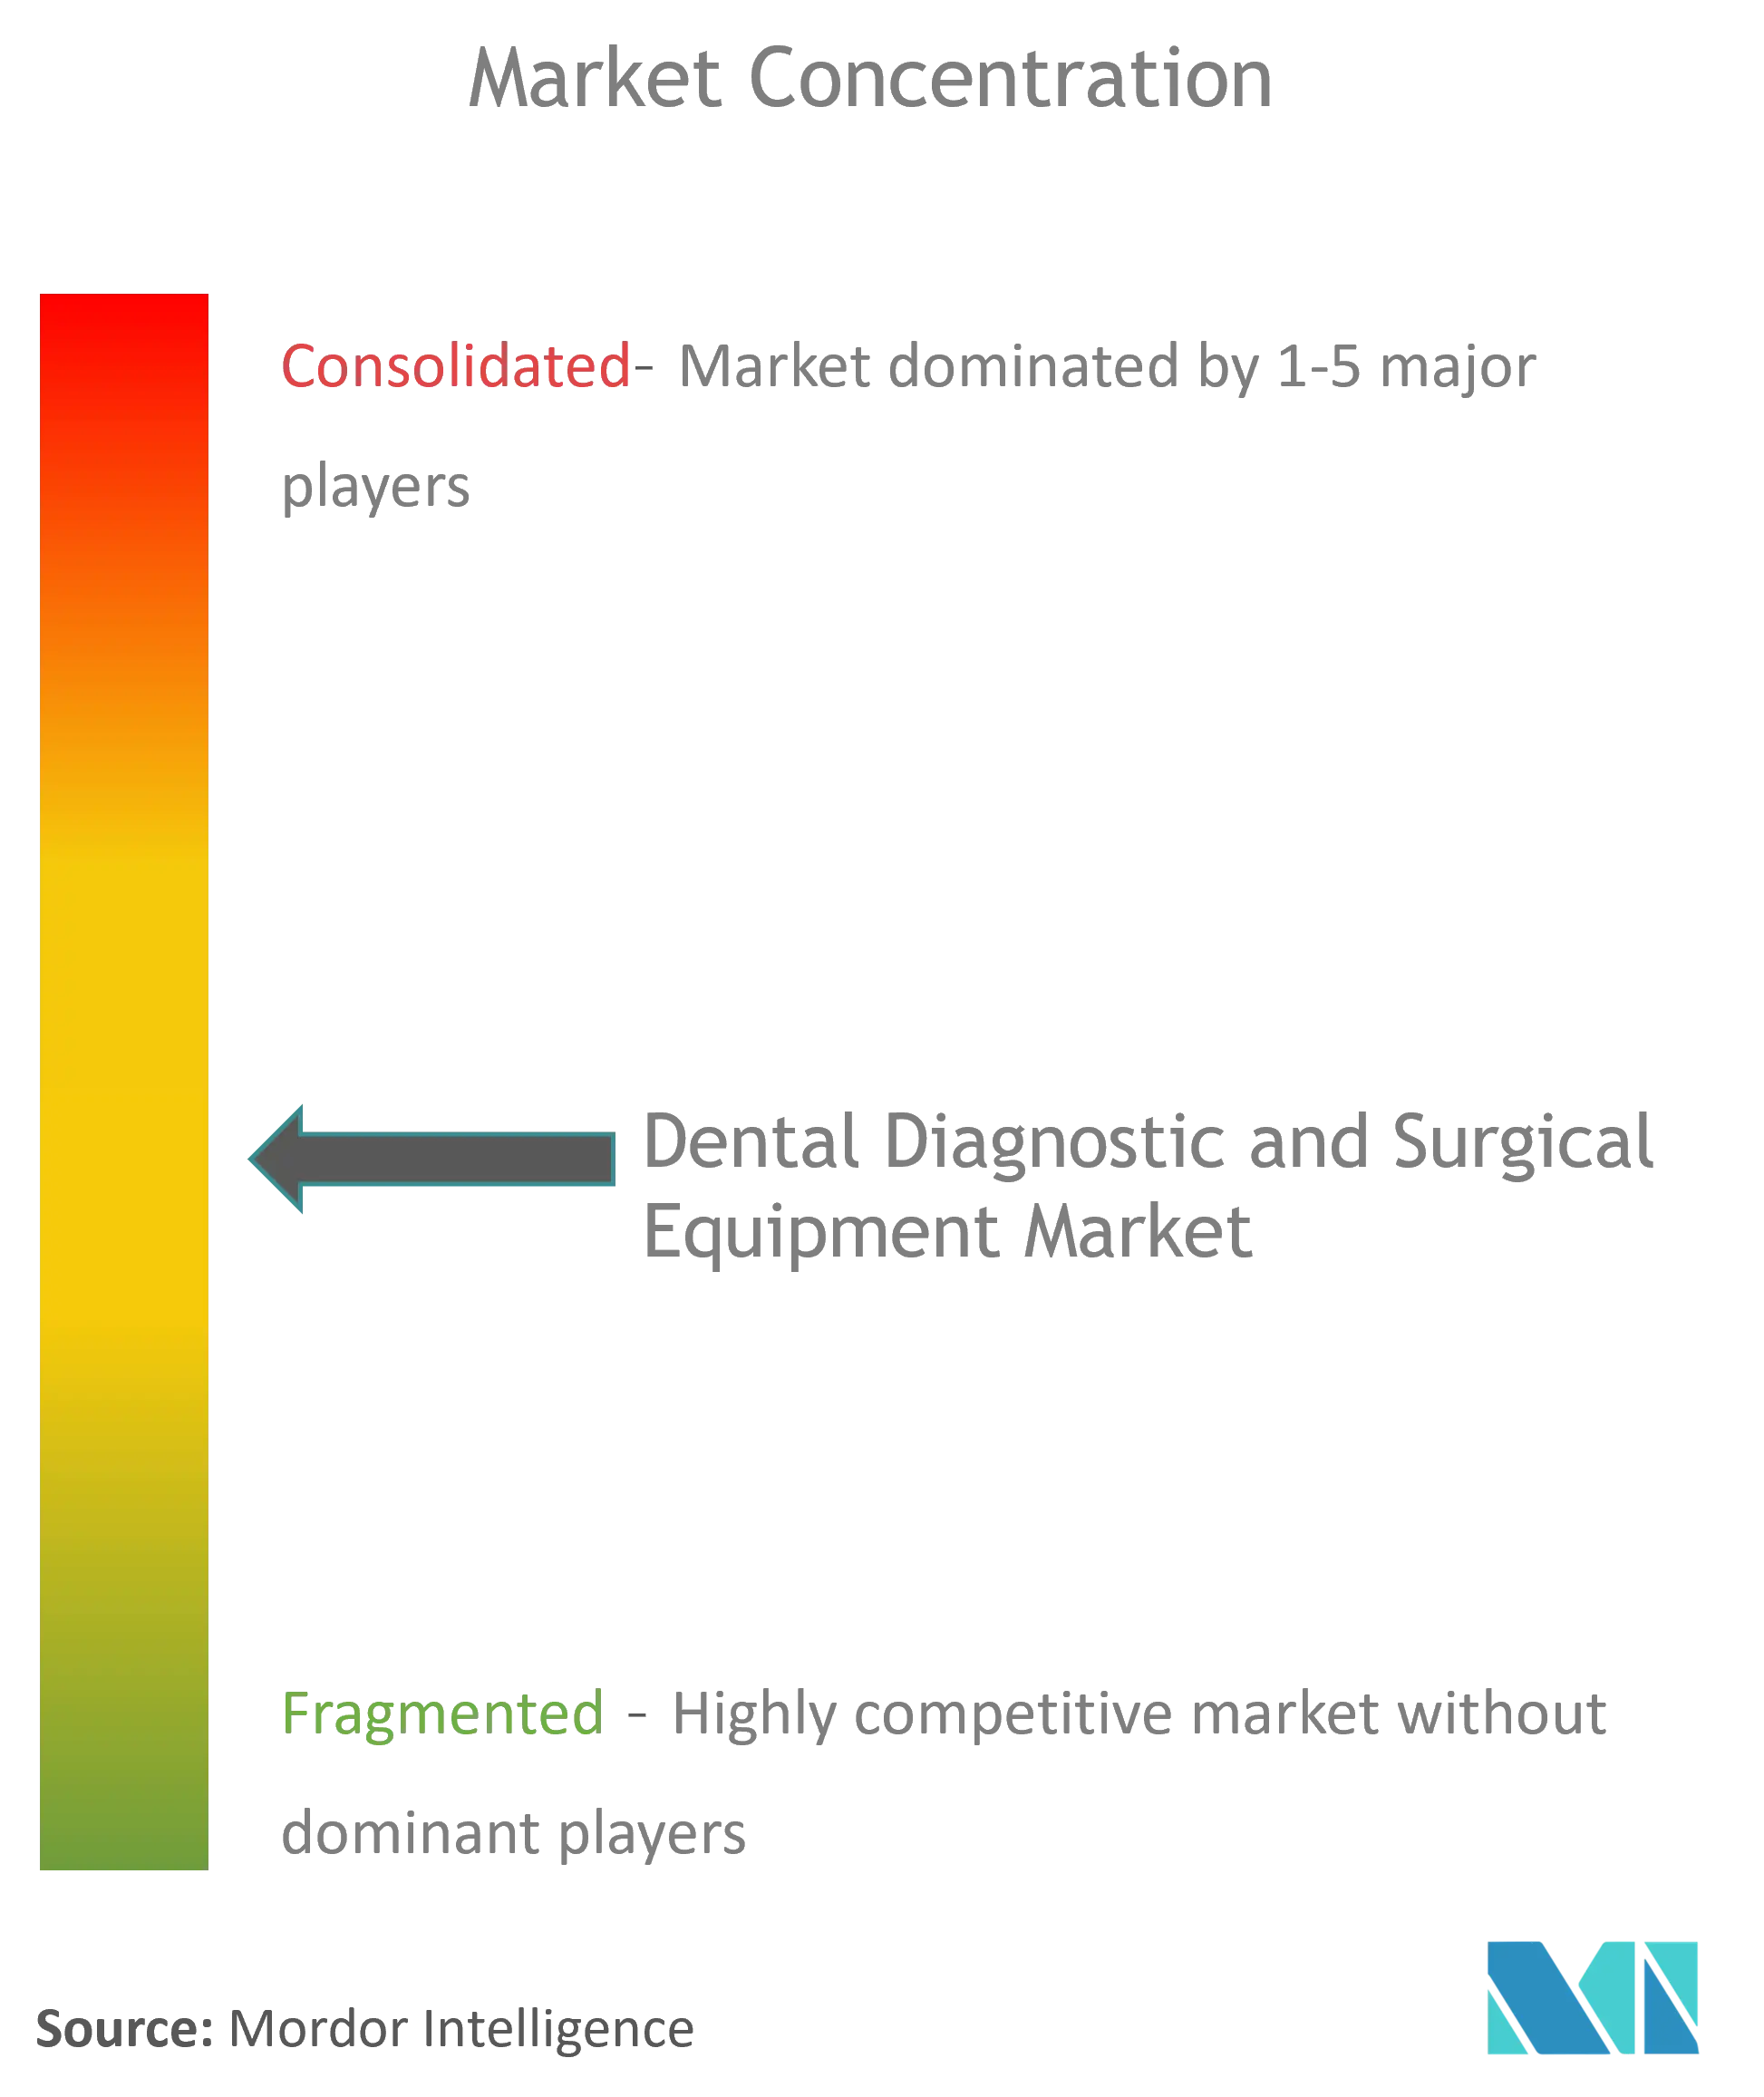 Dental Diagnostic And Surgical Market Concentration